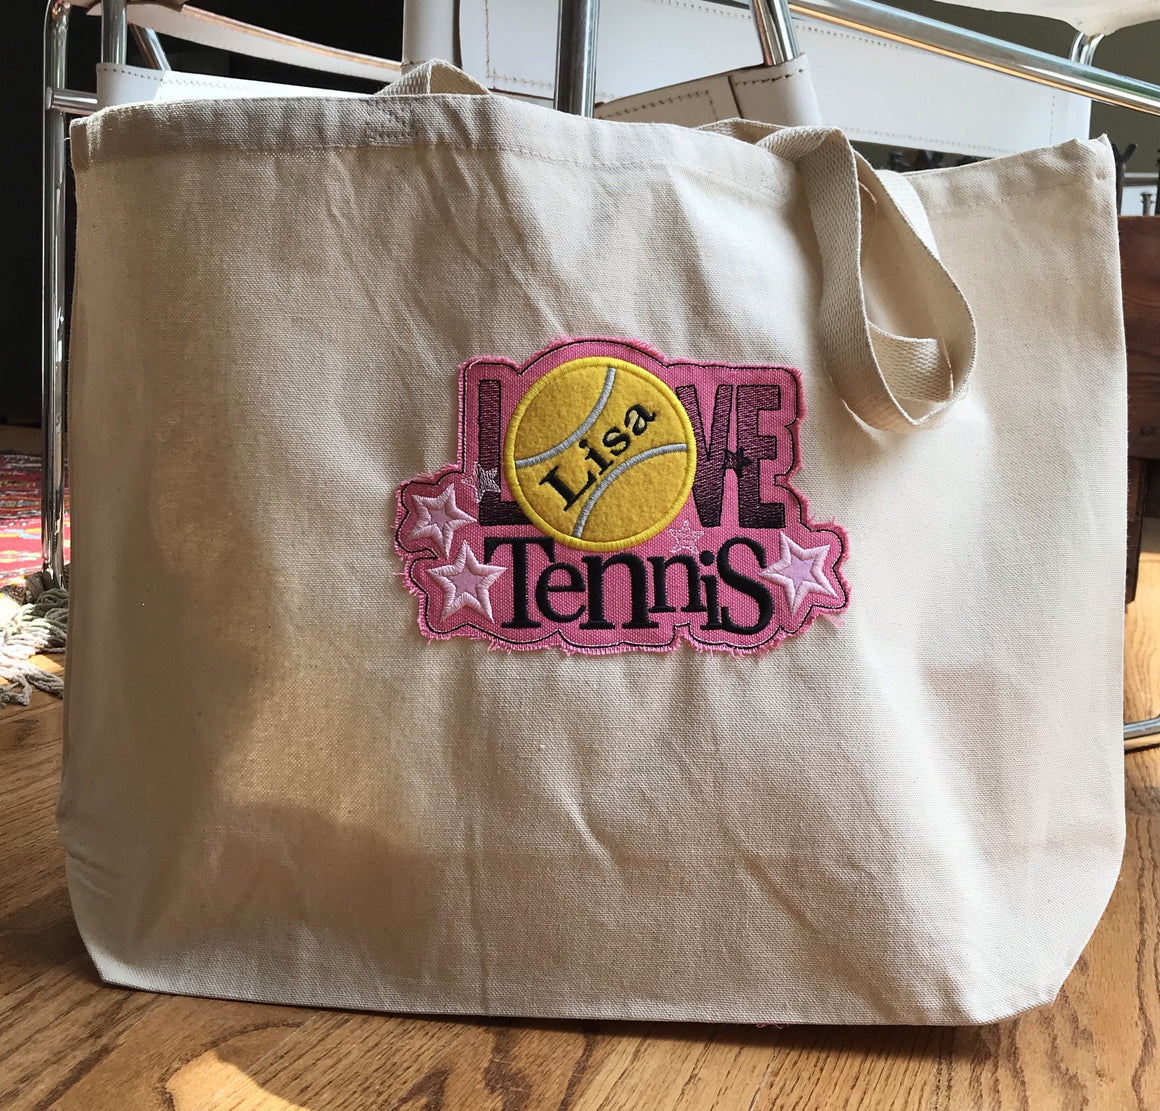 Tennis Shopping Tote Bag